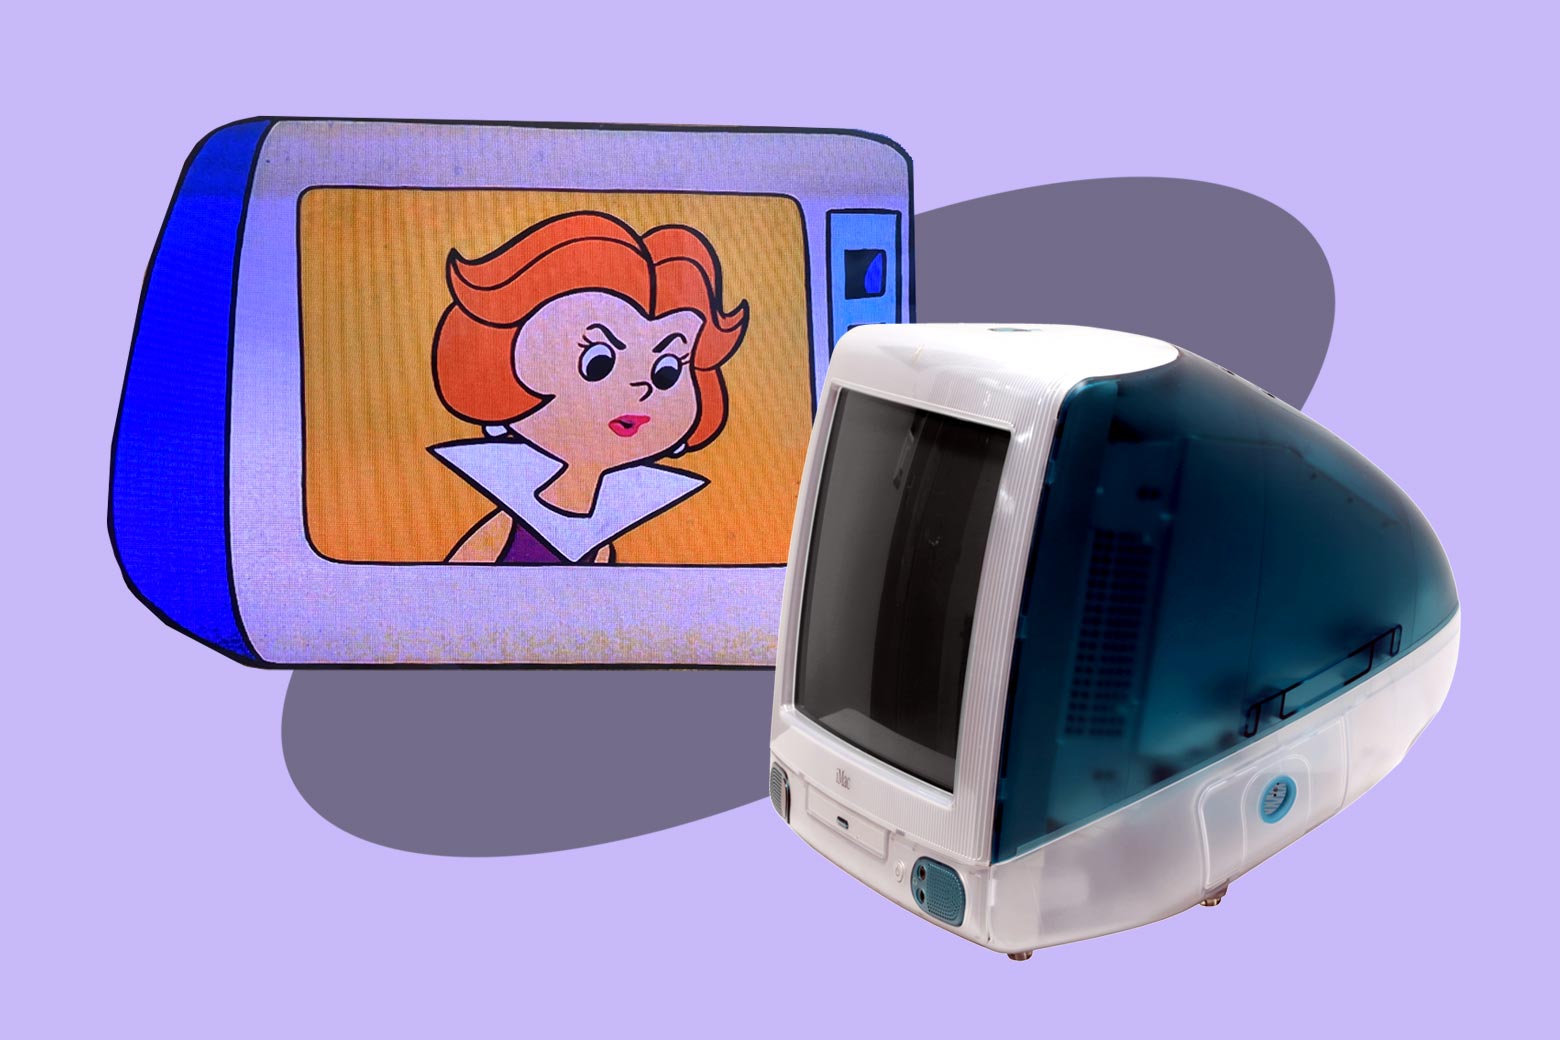 Jane Jetson on a monitor and an original Apple iMac monitor in Bondi Blue.